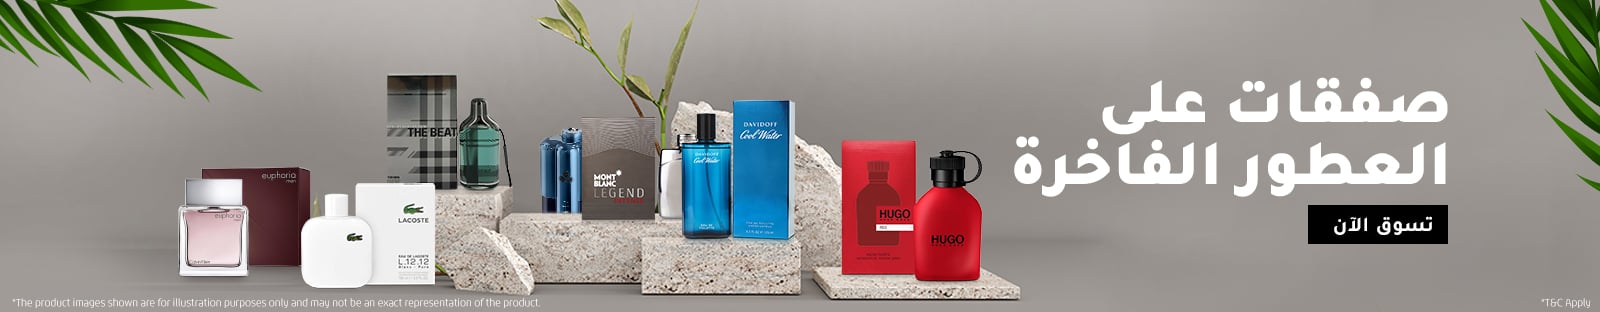 Deals-on-Premium-Perfumes-Arb-1600x312.jpg